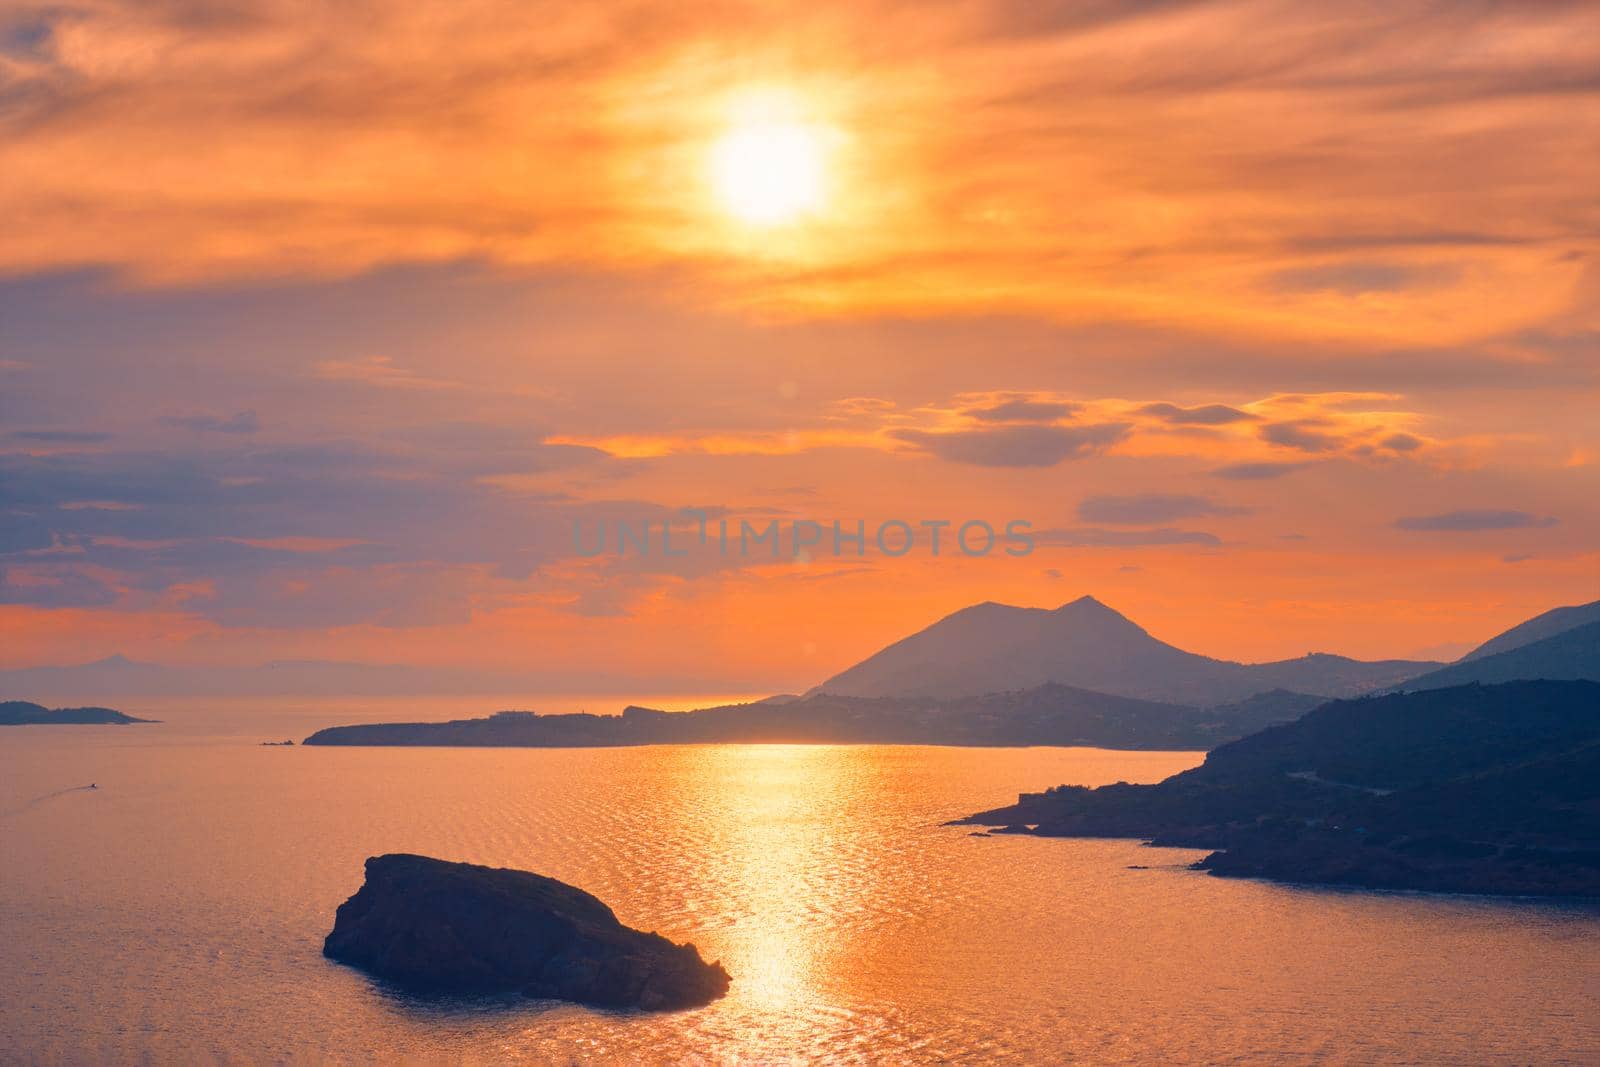 Aegean Sea with Greek islands view on sunset. Cape Sounion, Greece